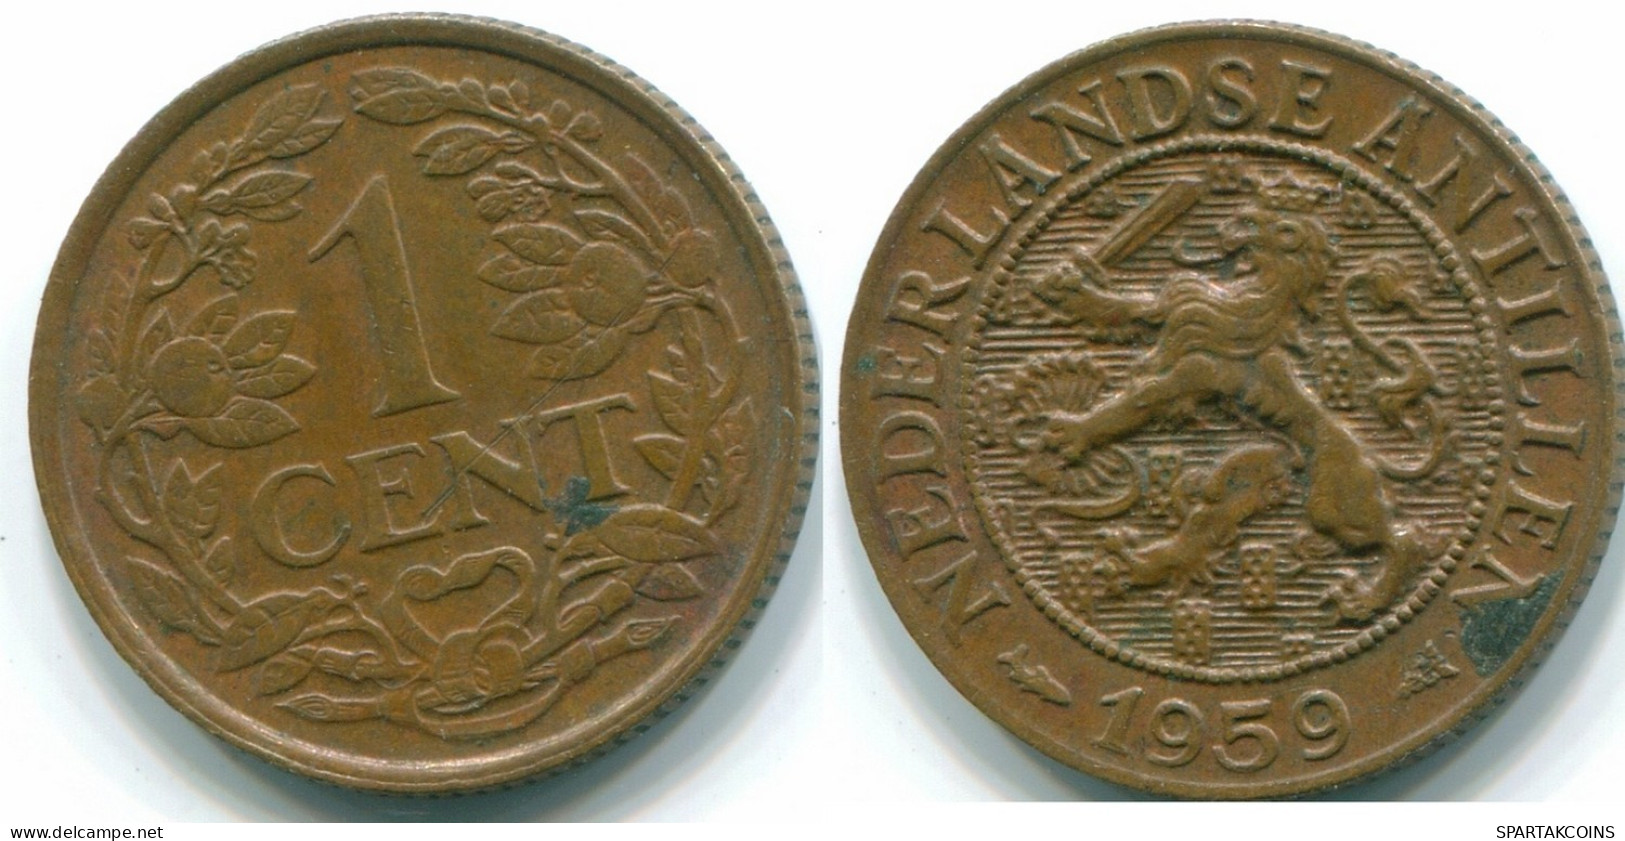 1 CENT 1959 NETHERLANDS ANTILLES Bronze Fish Colonial Coin #S11054.U.A - Netherlands Antilles